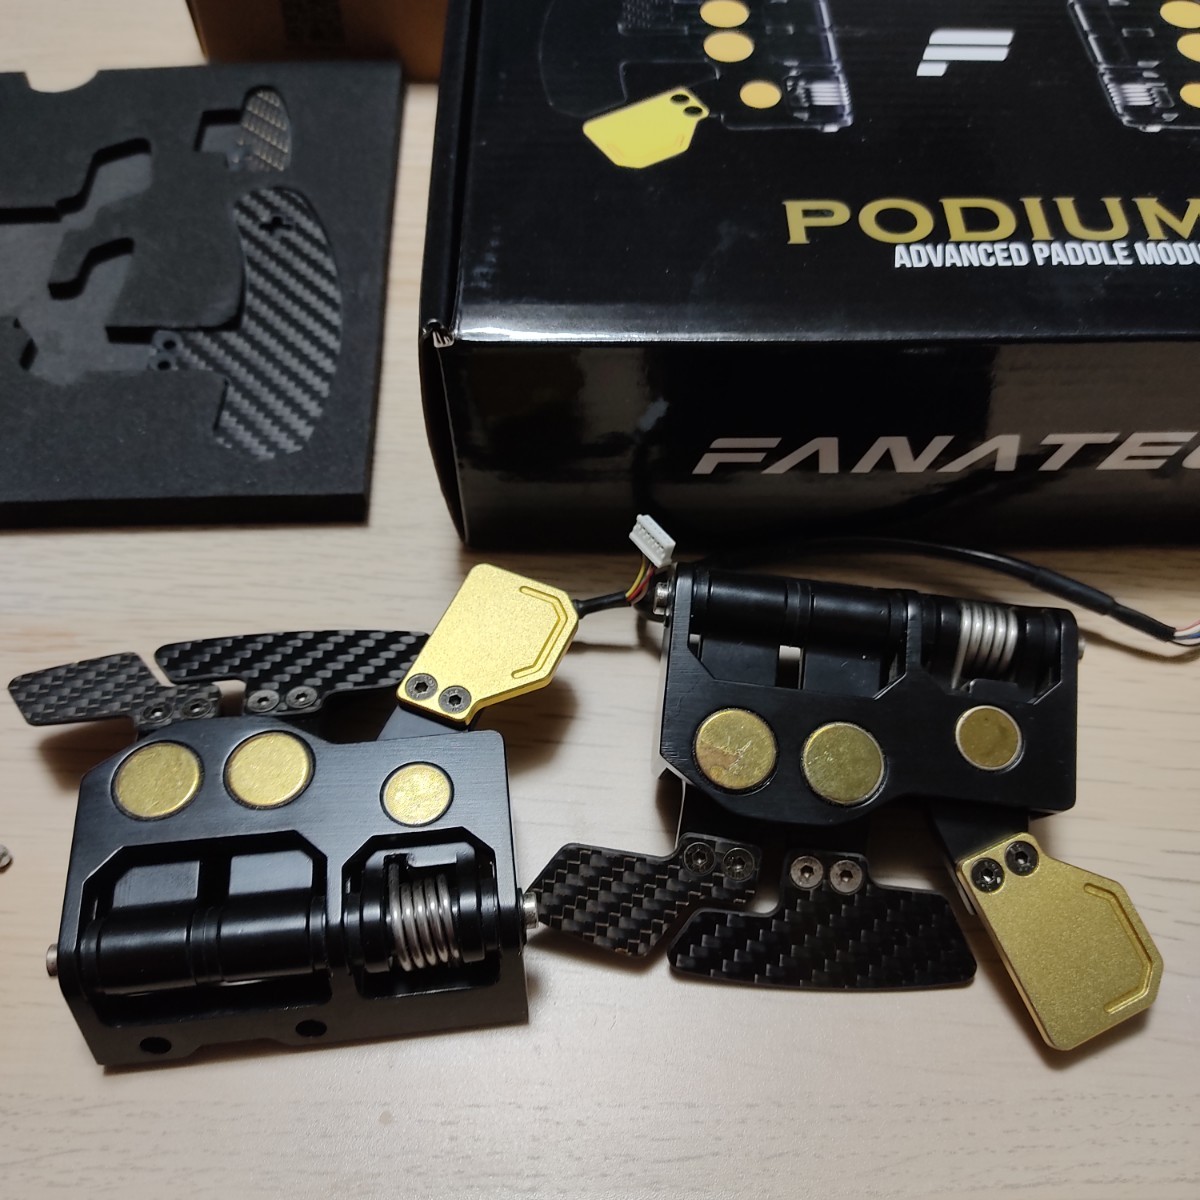 FANATEC Podium Advanced Paddle Module ファナテック最上位 6パドルシフト 中古 ハンコン レーシングゲーム PS PC Xbox F1 2022 formula_画像2